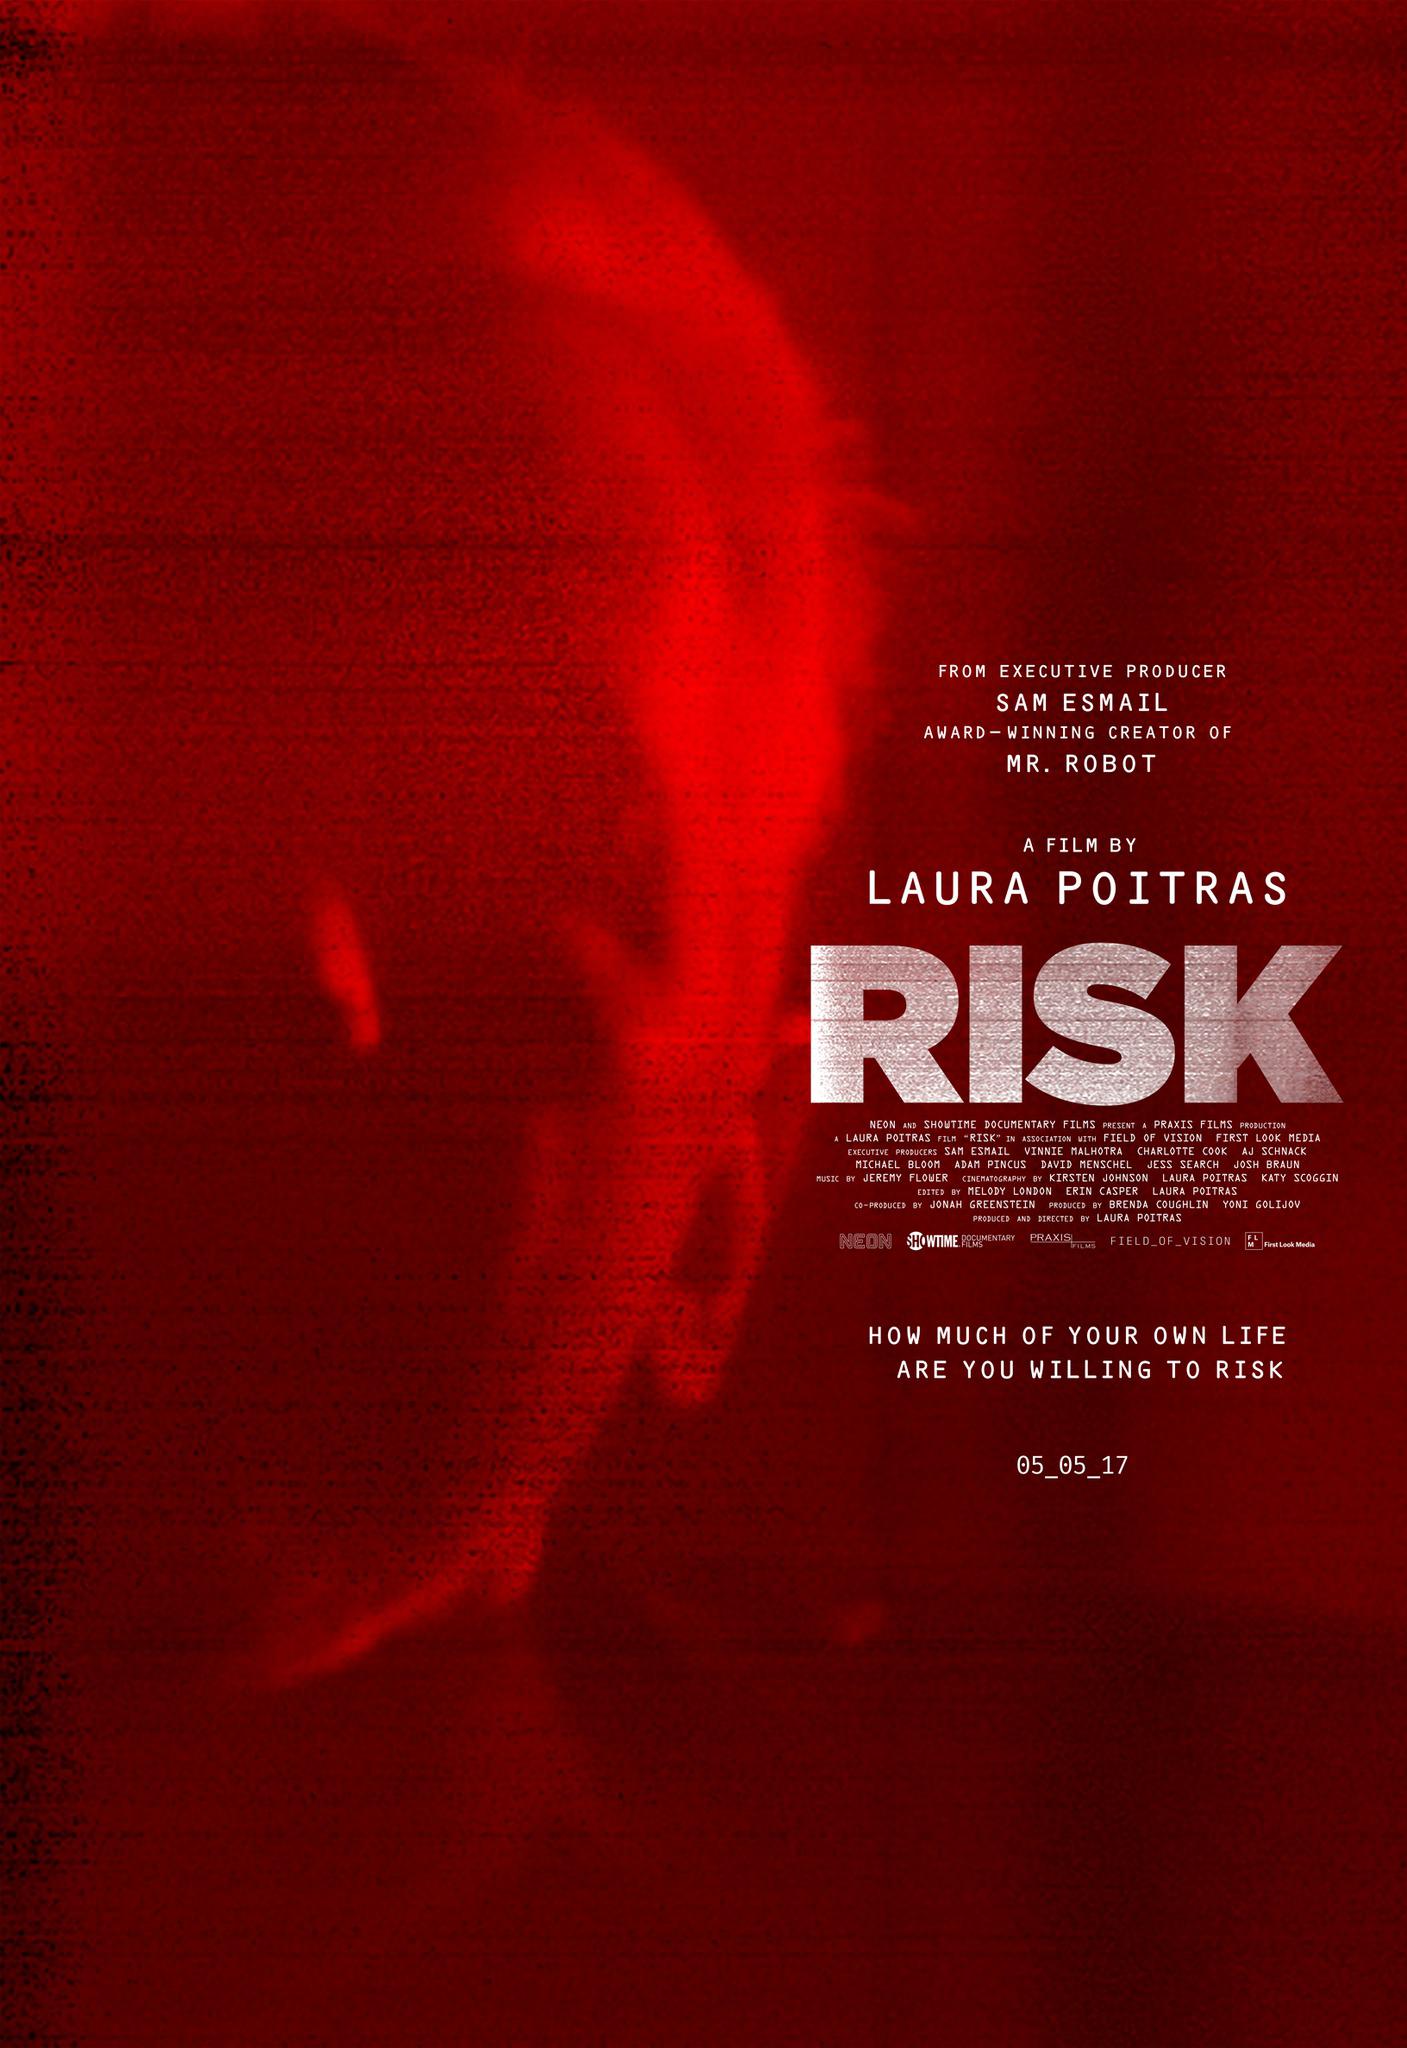 [风险].Risk.2016.BluRay.1080p.AVC.DTS-HD.MA.5.1-HDHome   21.4G-1.jpg